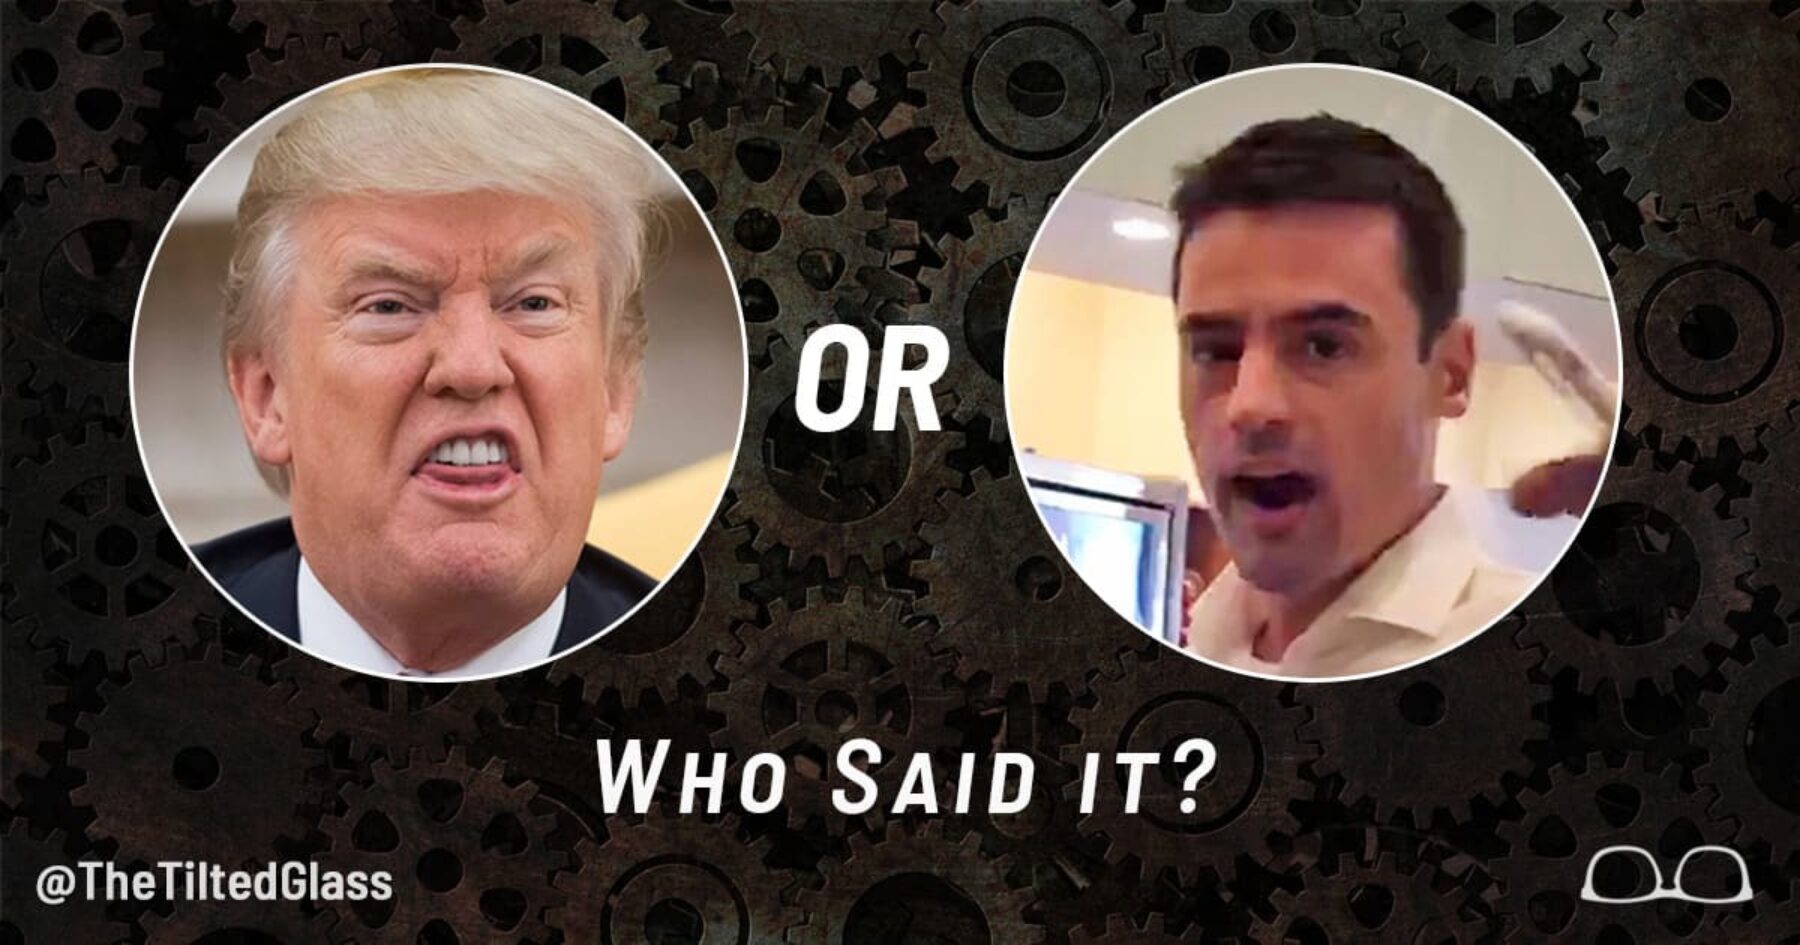 Quiz: Who Said it? Aaron Schlossberg or Donald Trump?